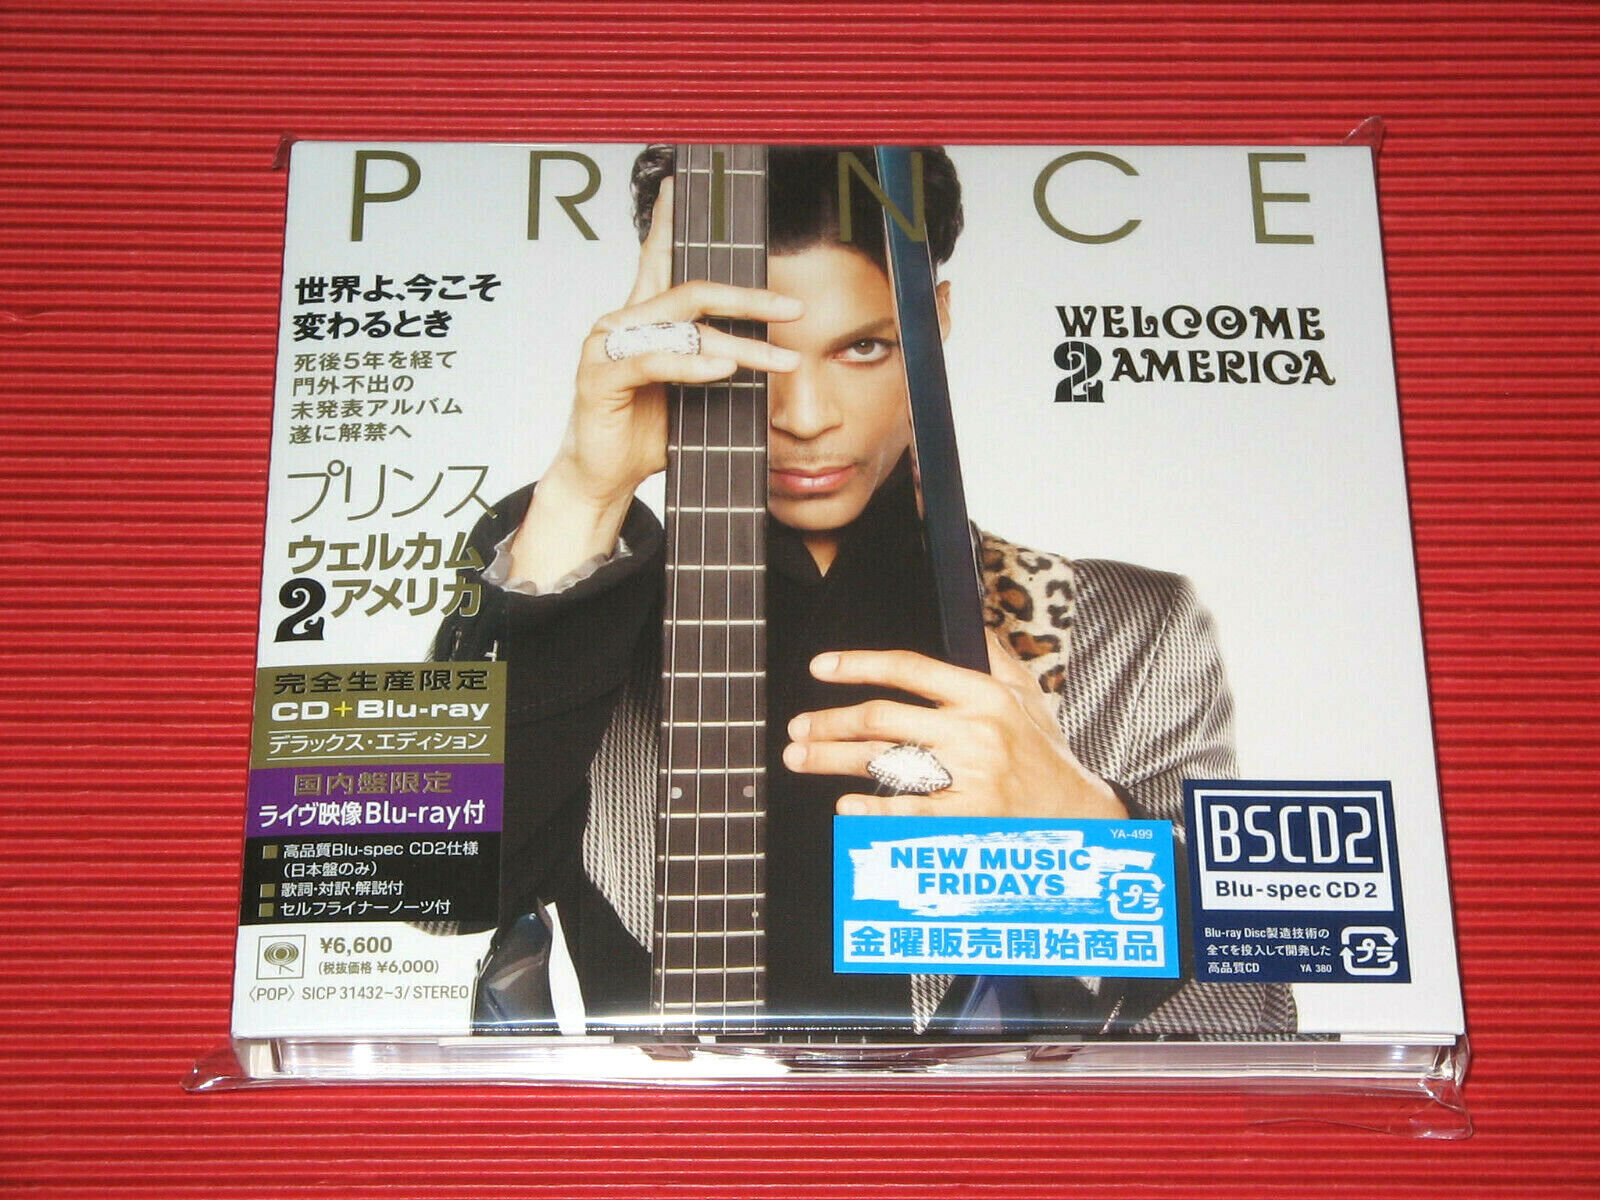 6ET PRINCE WELCOM 2 AMERICA  JAPAN BLU-SPEC CD + BLU-RAY DISC  DIGIPAK